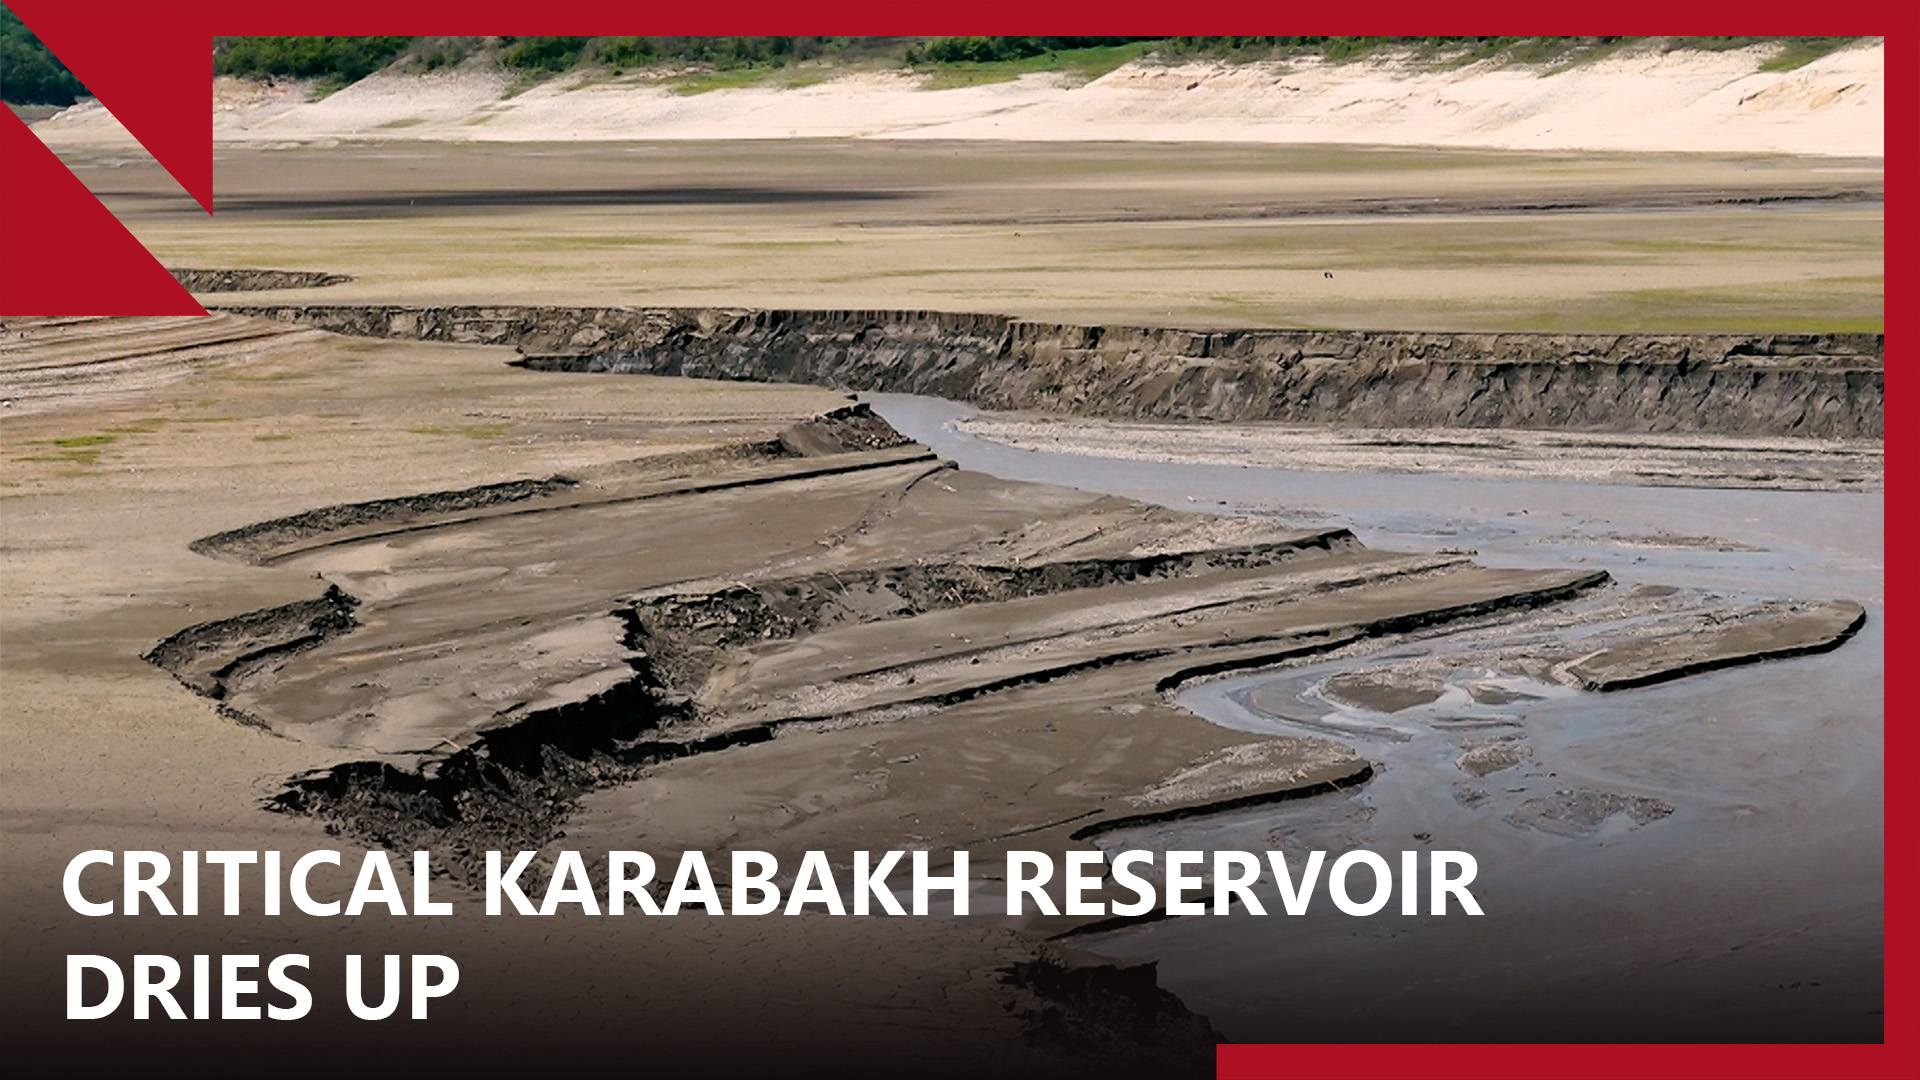 Critical reservoir in Karabakh dries up amid Azerbaijan’s blockade